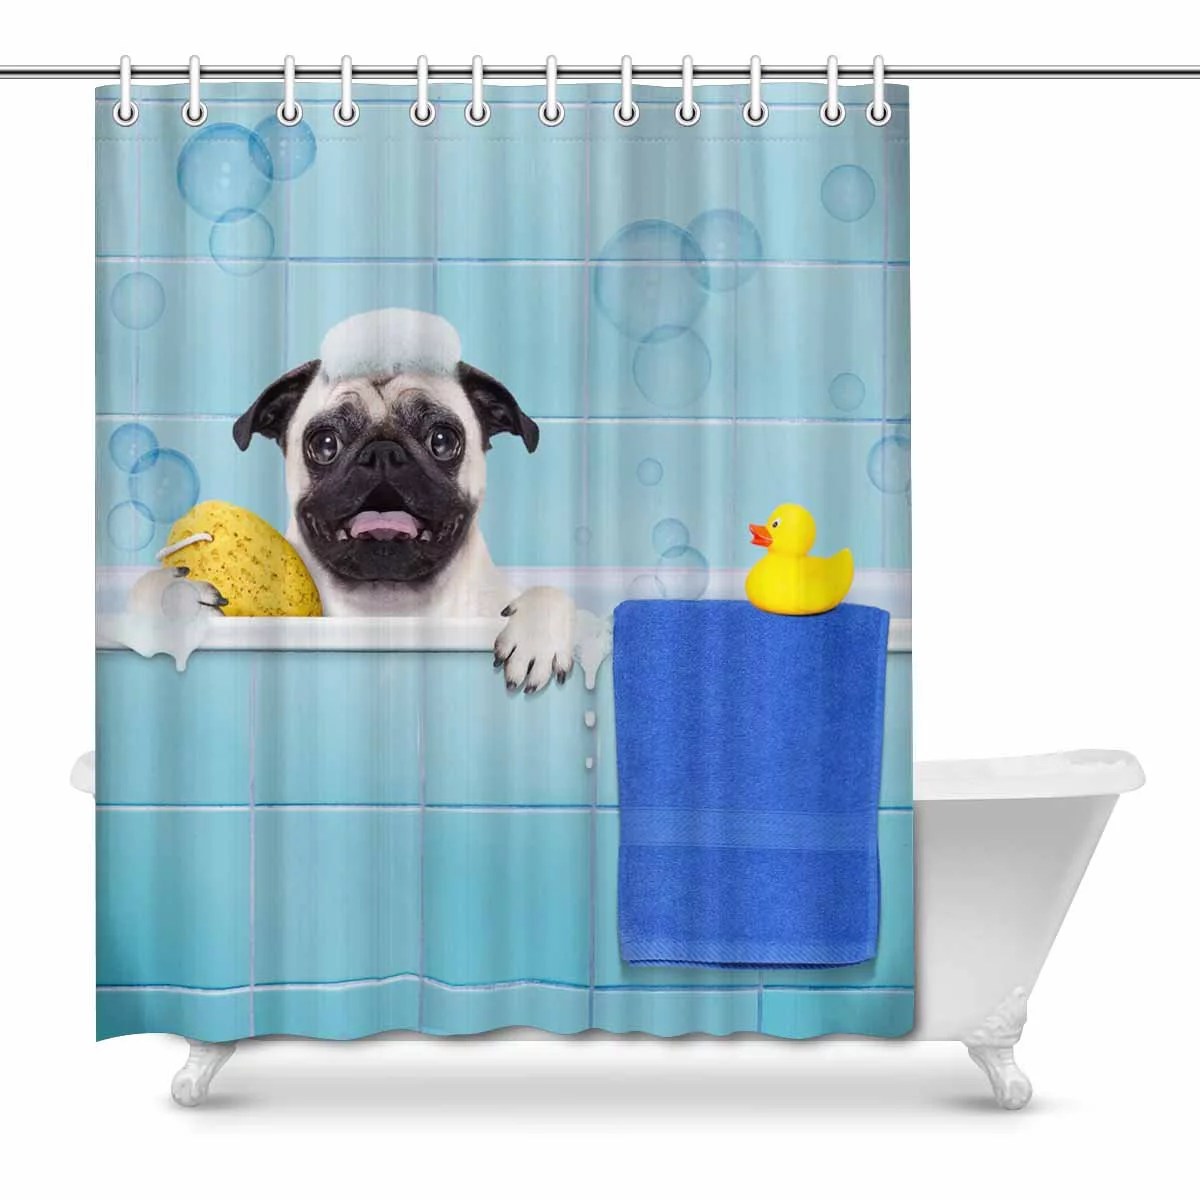 MKHERT Funny Pug Dog with Yellow Rubber Duck in Bathtub Waterproof